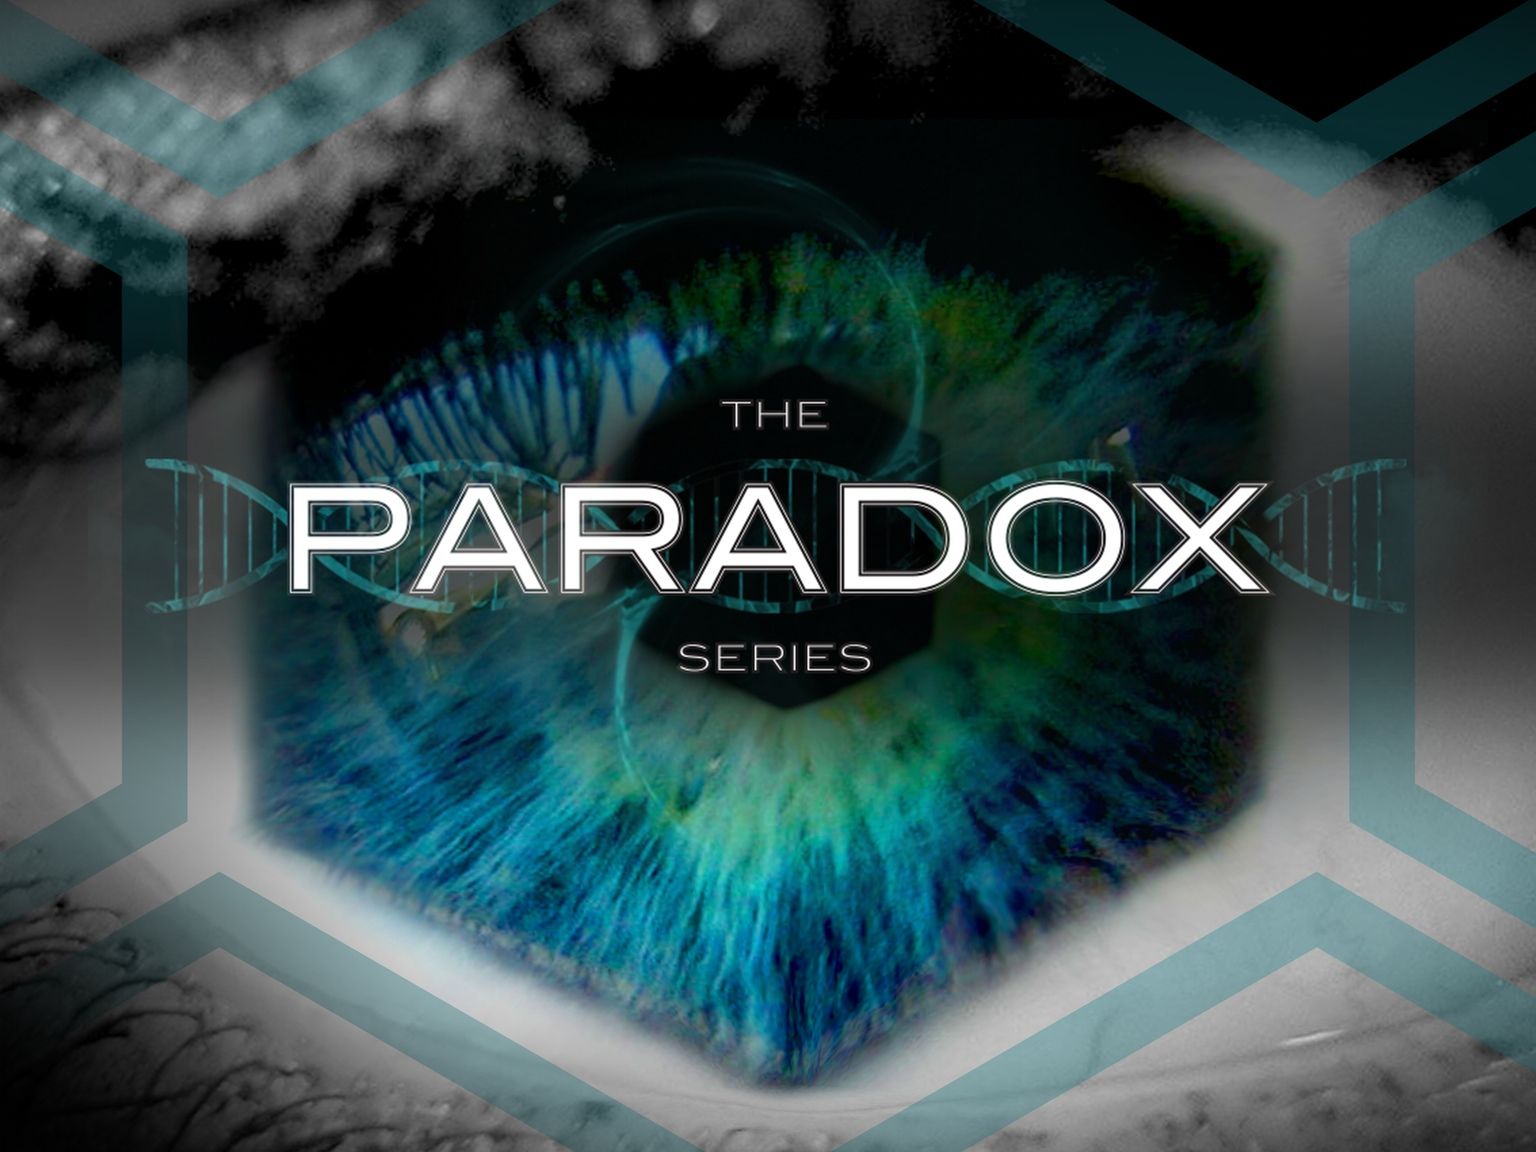 The Paradox Series